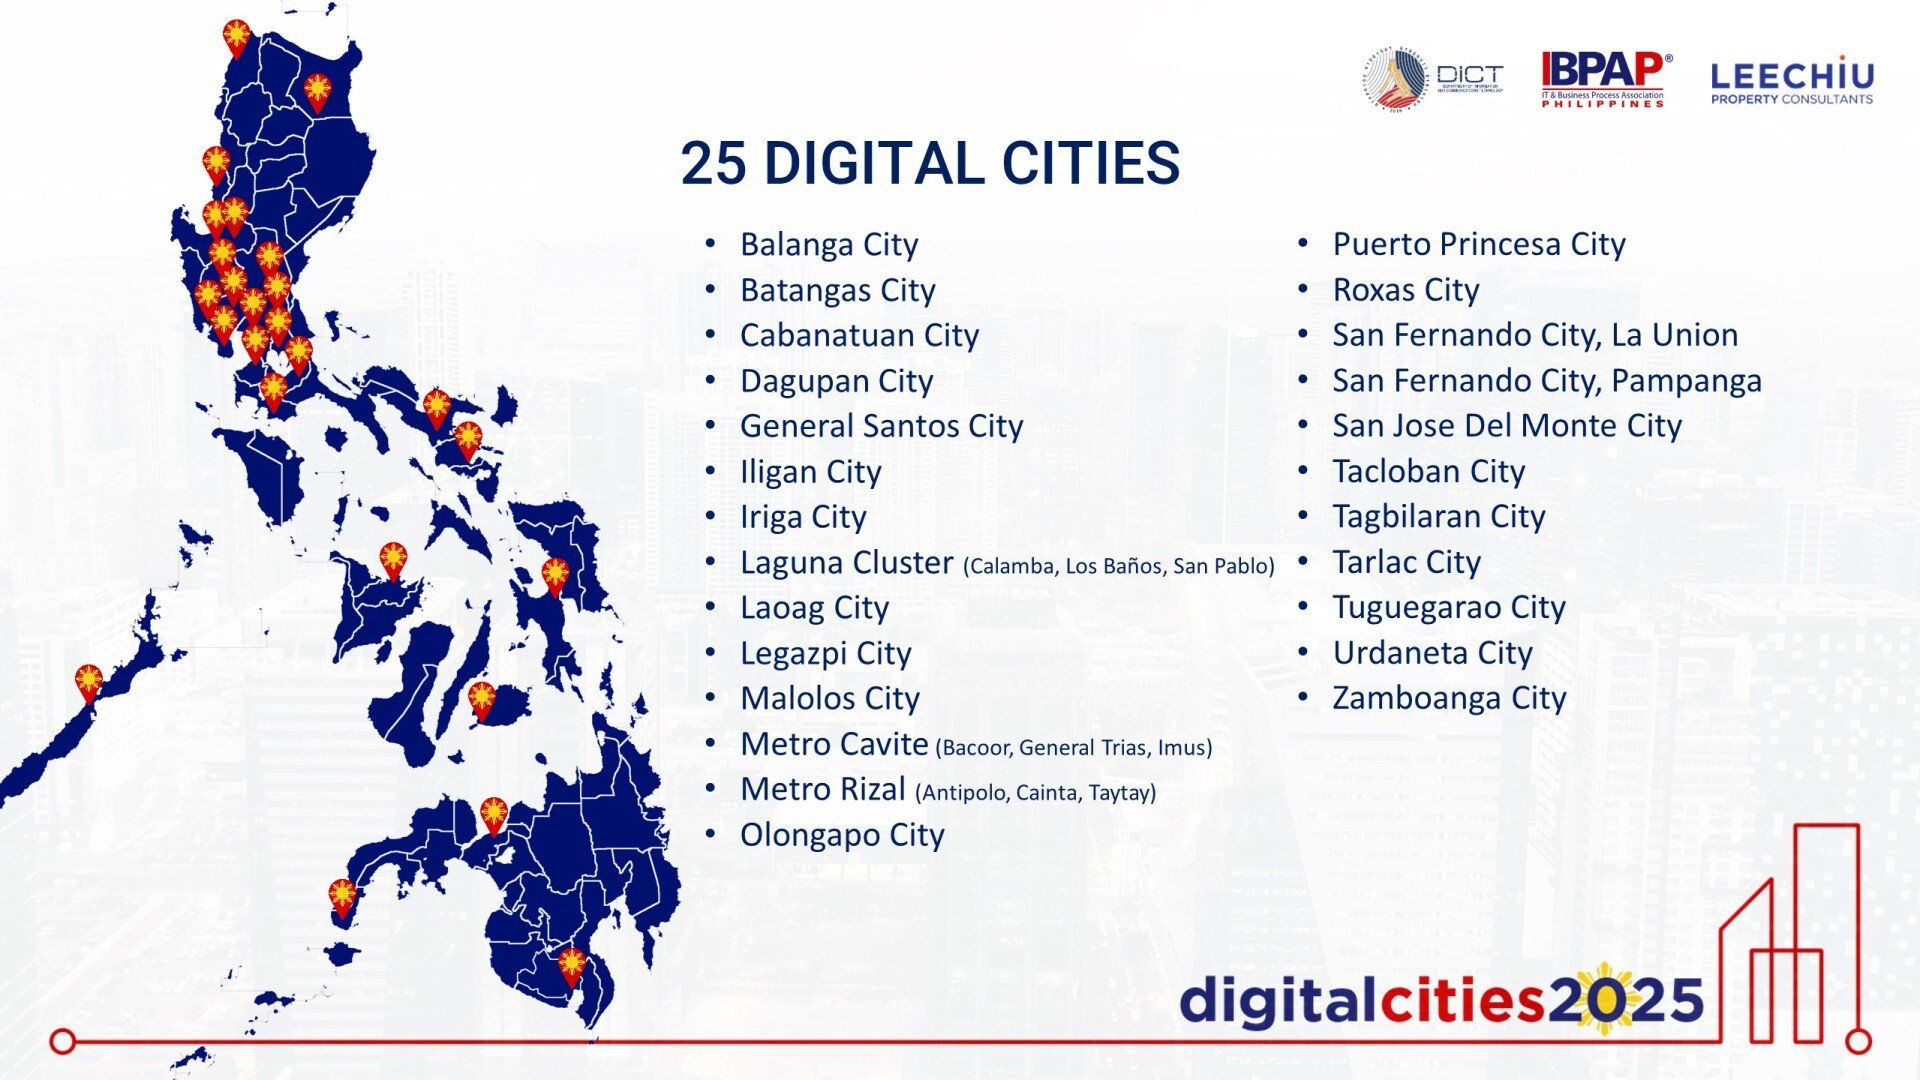 IBPAP.org Digital Cities 2025